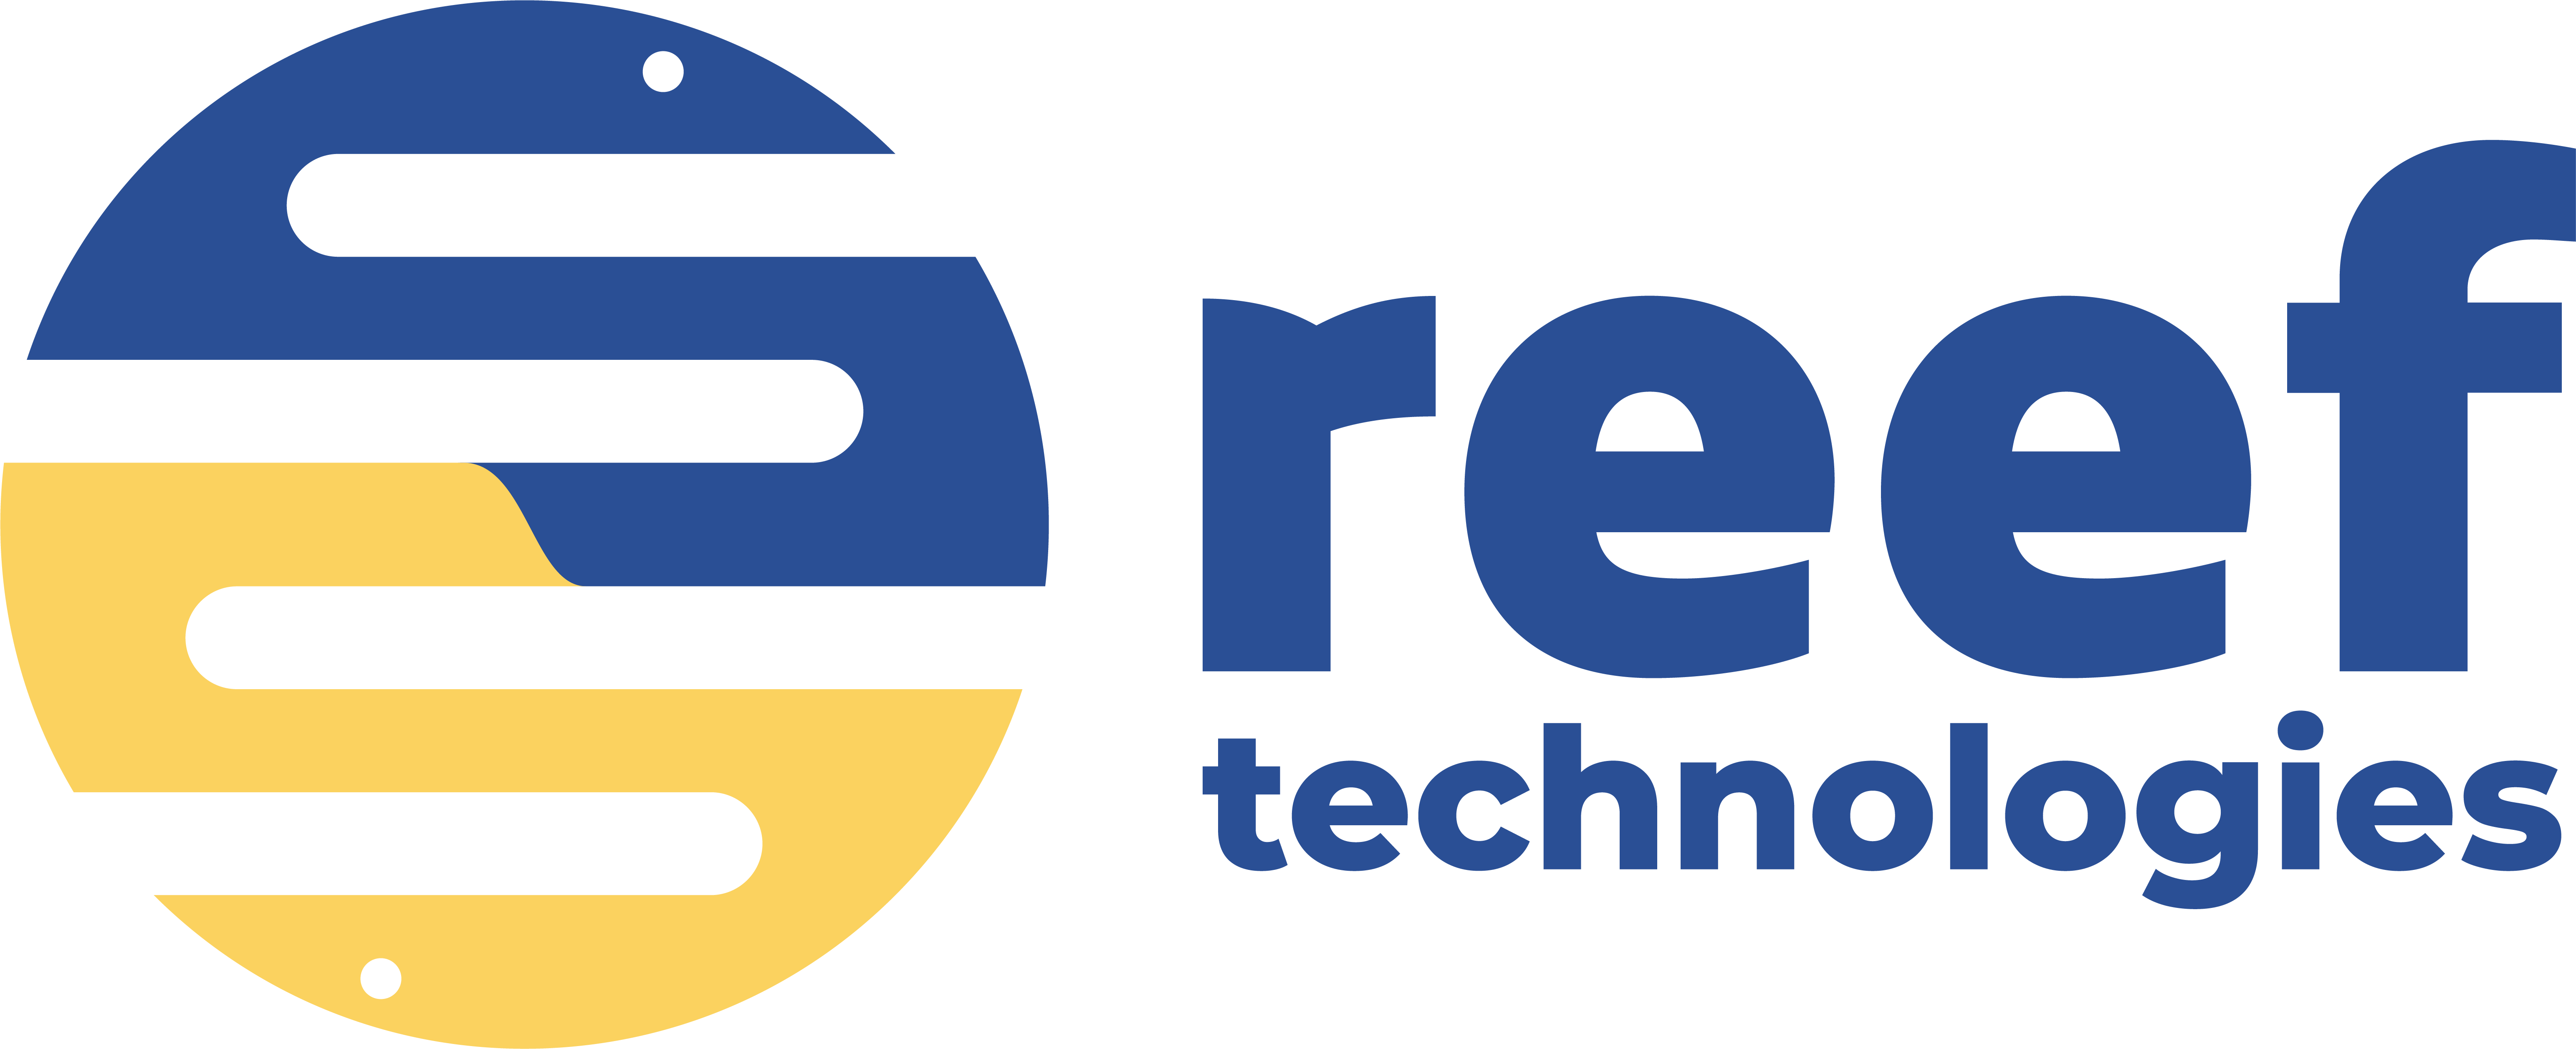 Reef Technologies